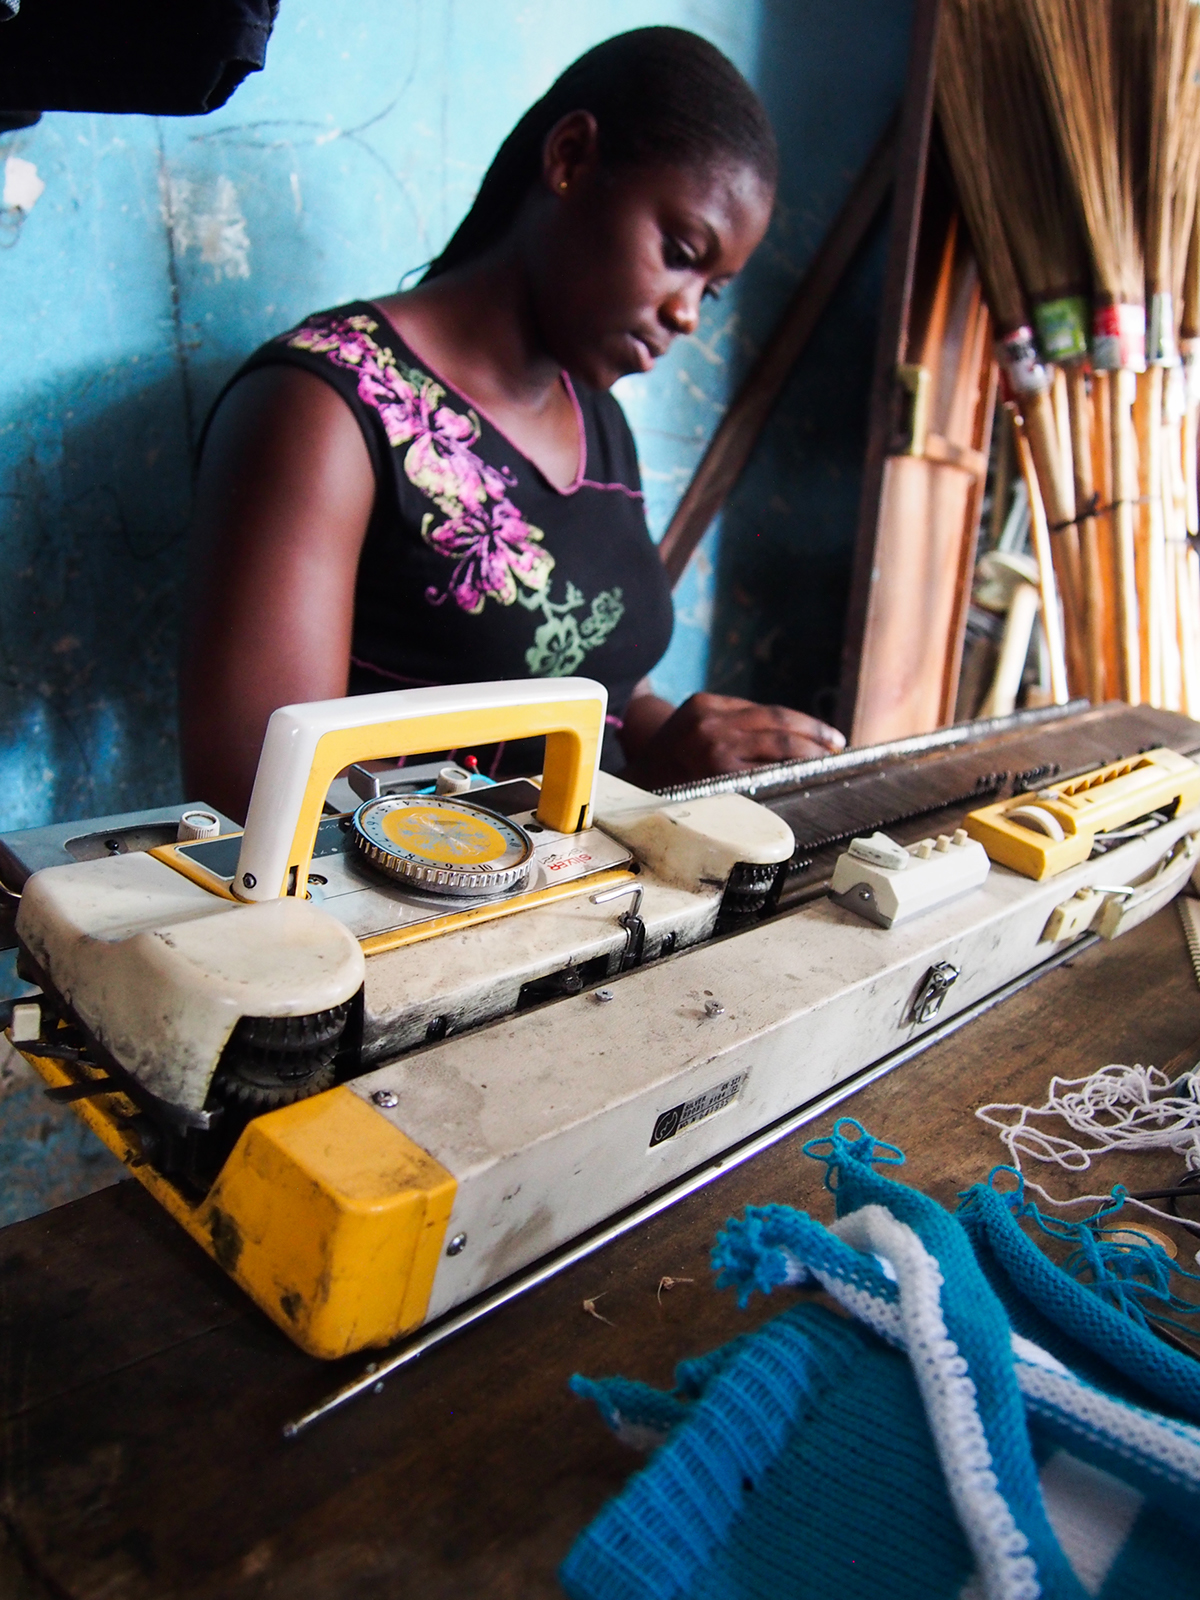 brazzaville Congo market knitting portrait microfinance hope international